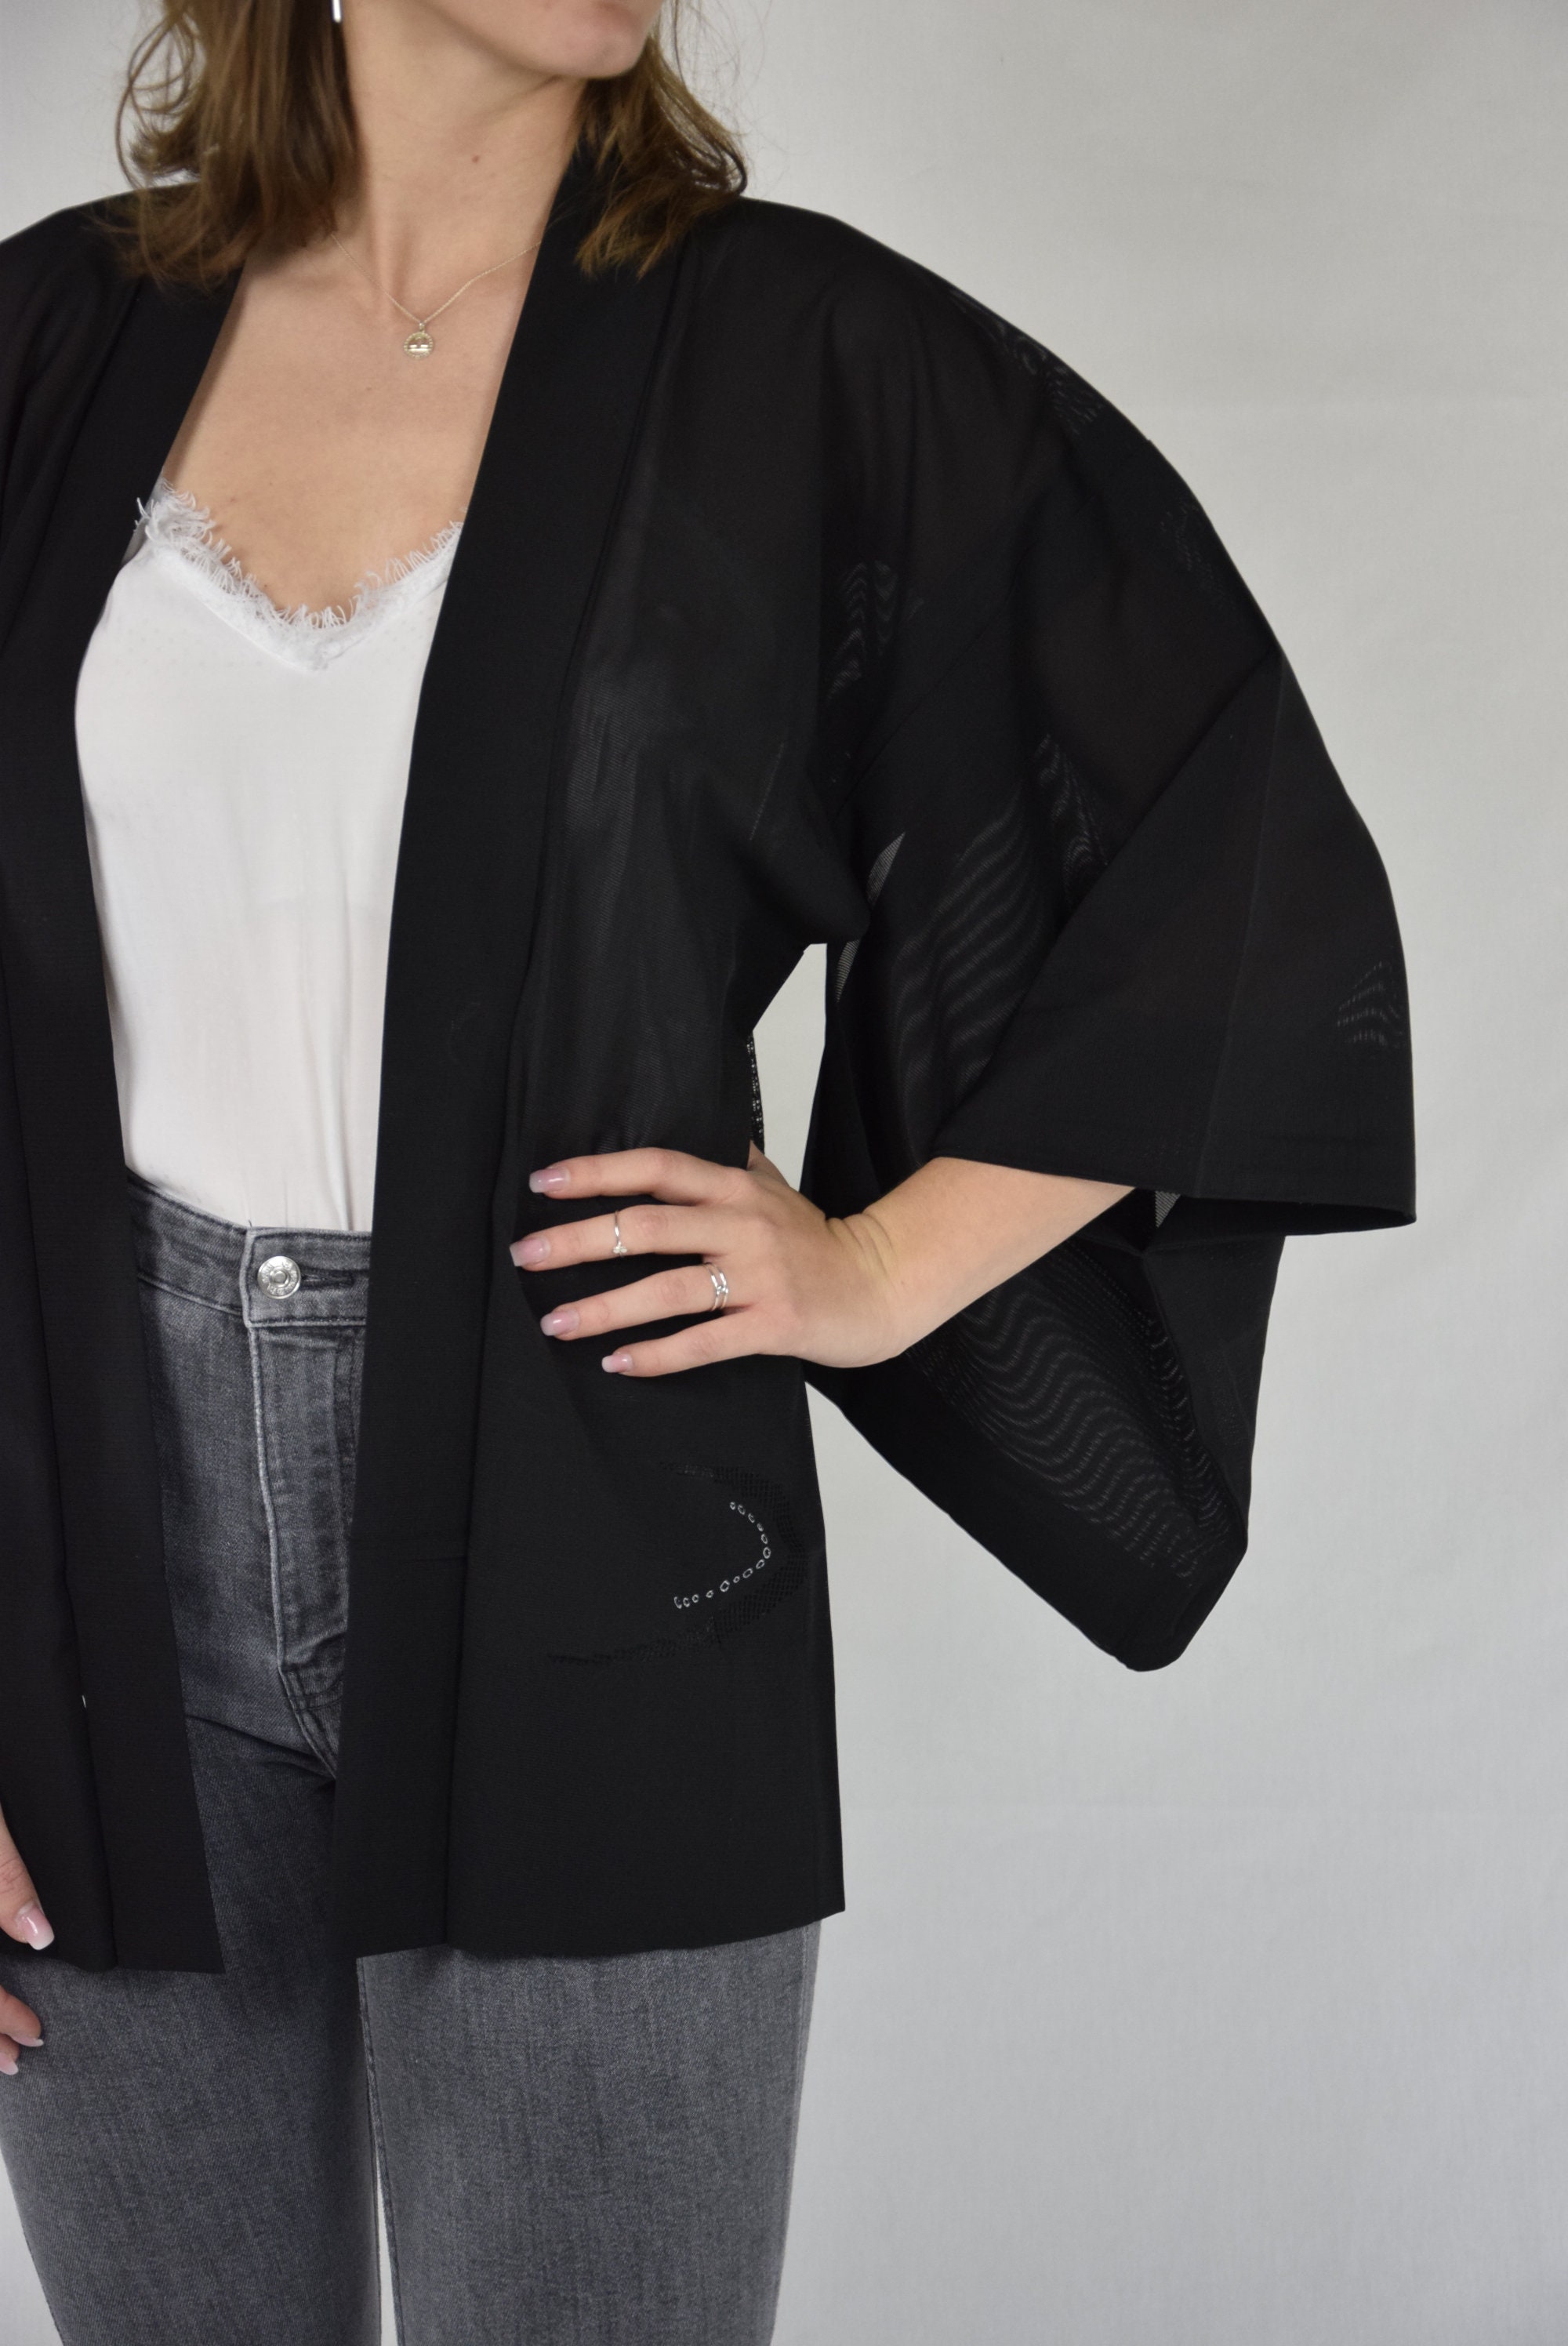 Kimono Jacket black, Vintage Haori, Summer Jacket, Short Kimono, Boho ...